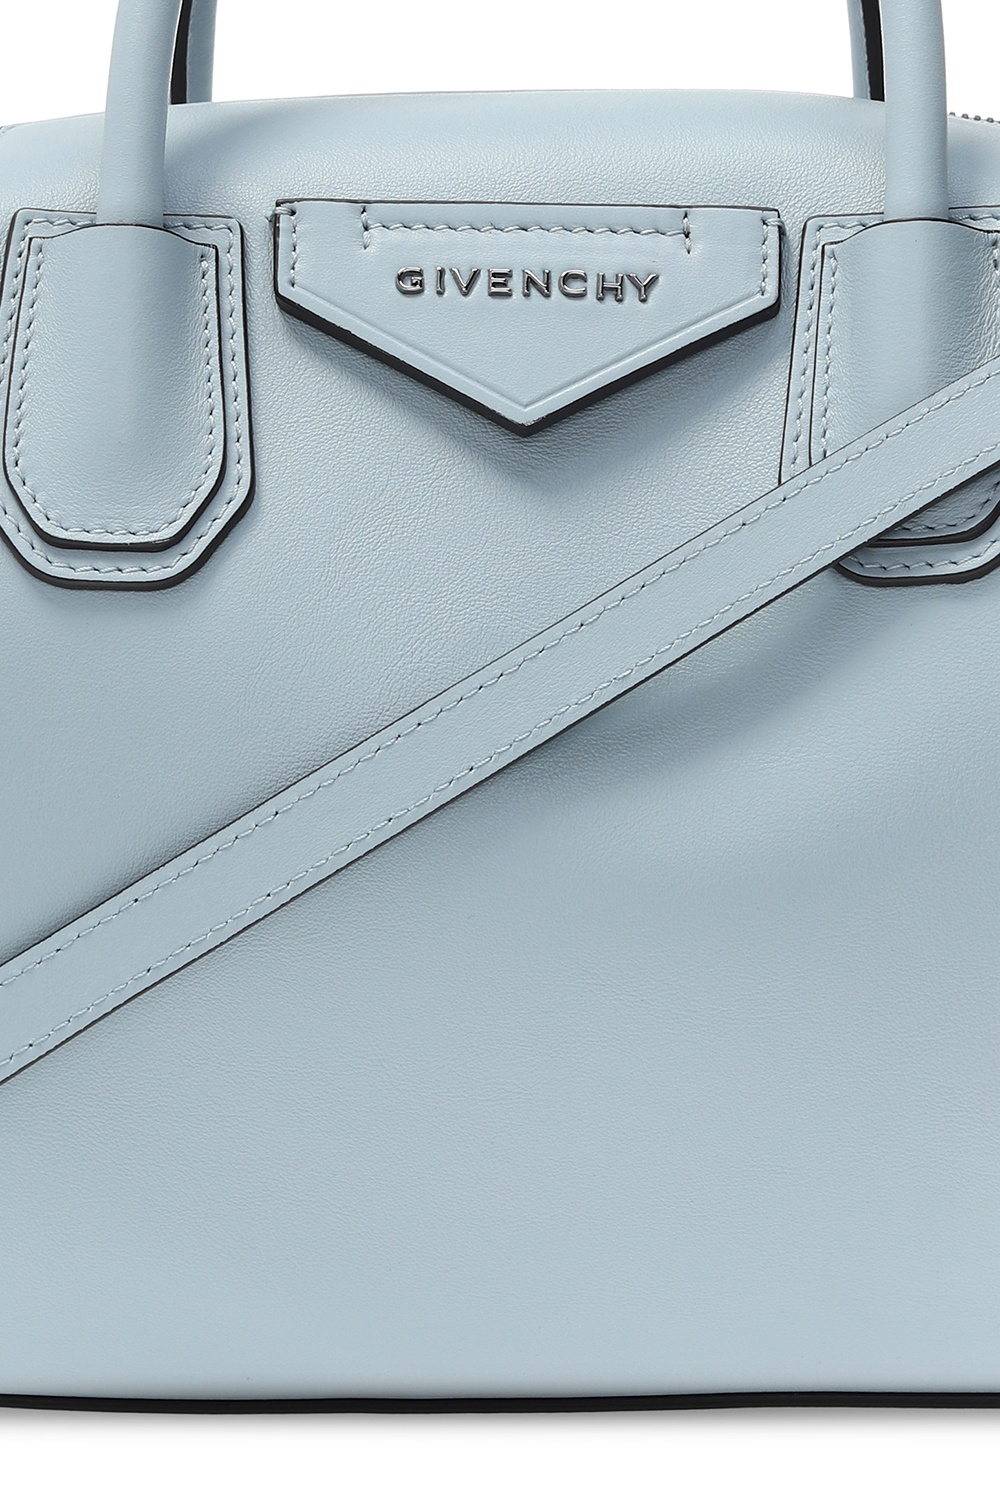 Givenchy 'Antigona Small' shoulder bag